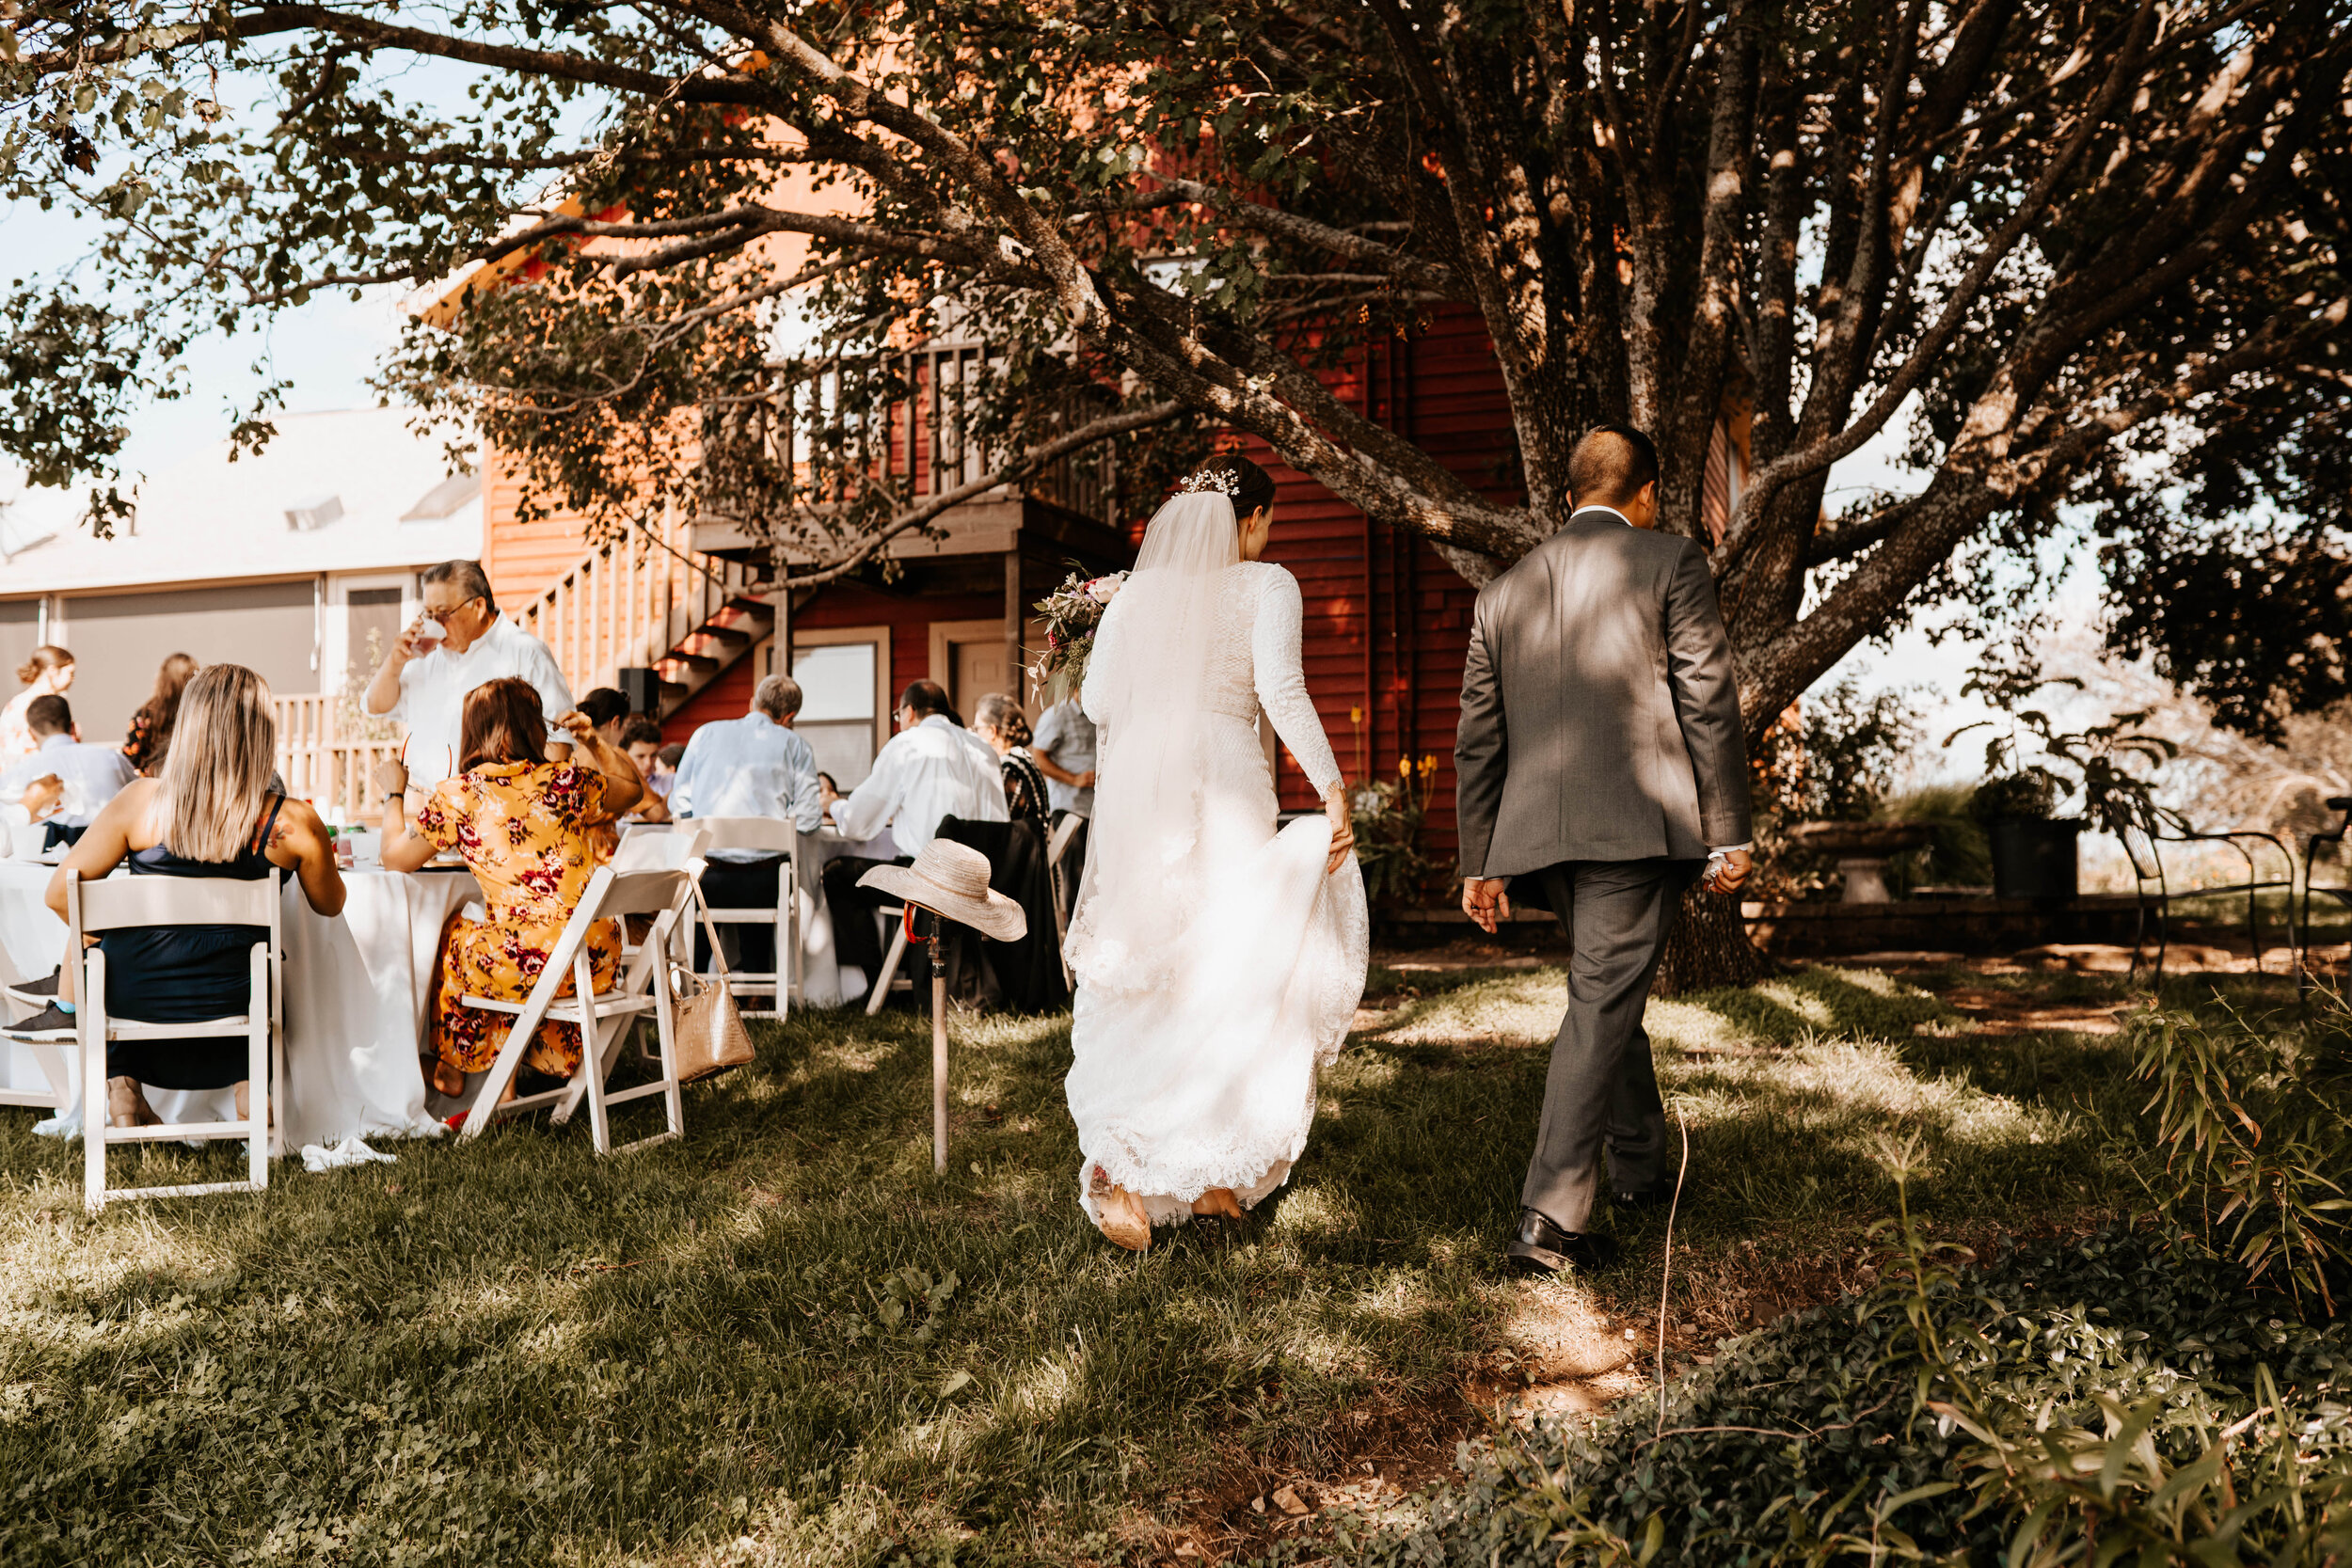 Chelsea + Long - Intimate Outdoor Summer Missouri Wedding 181.jpg